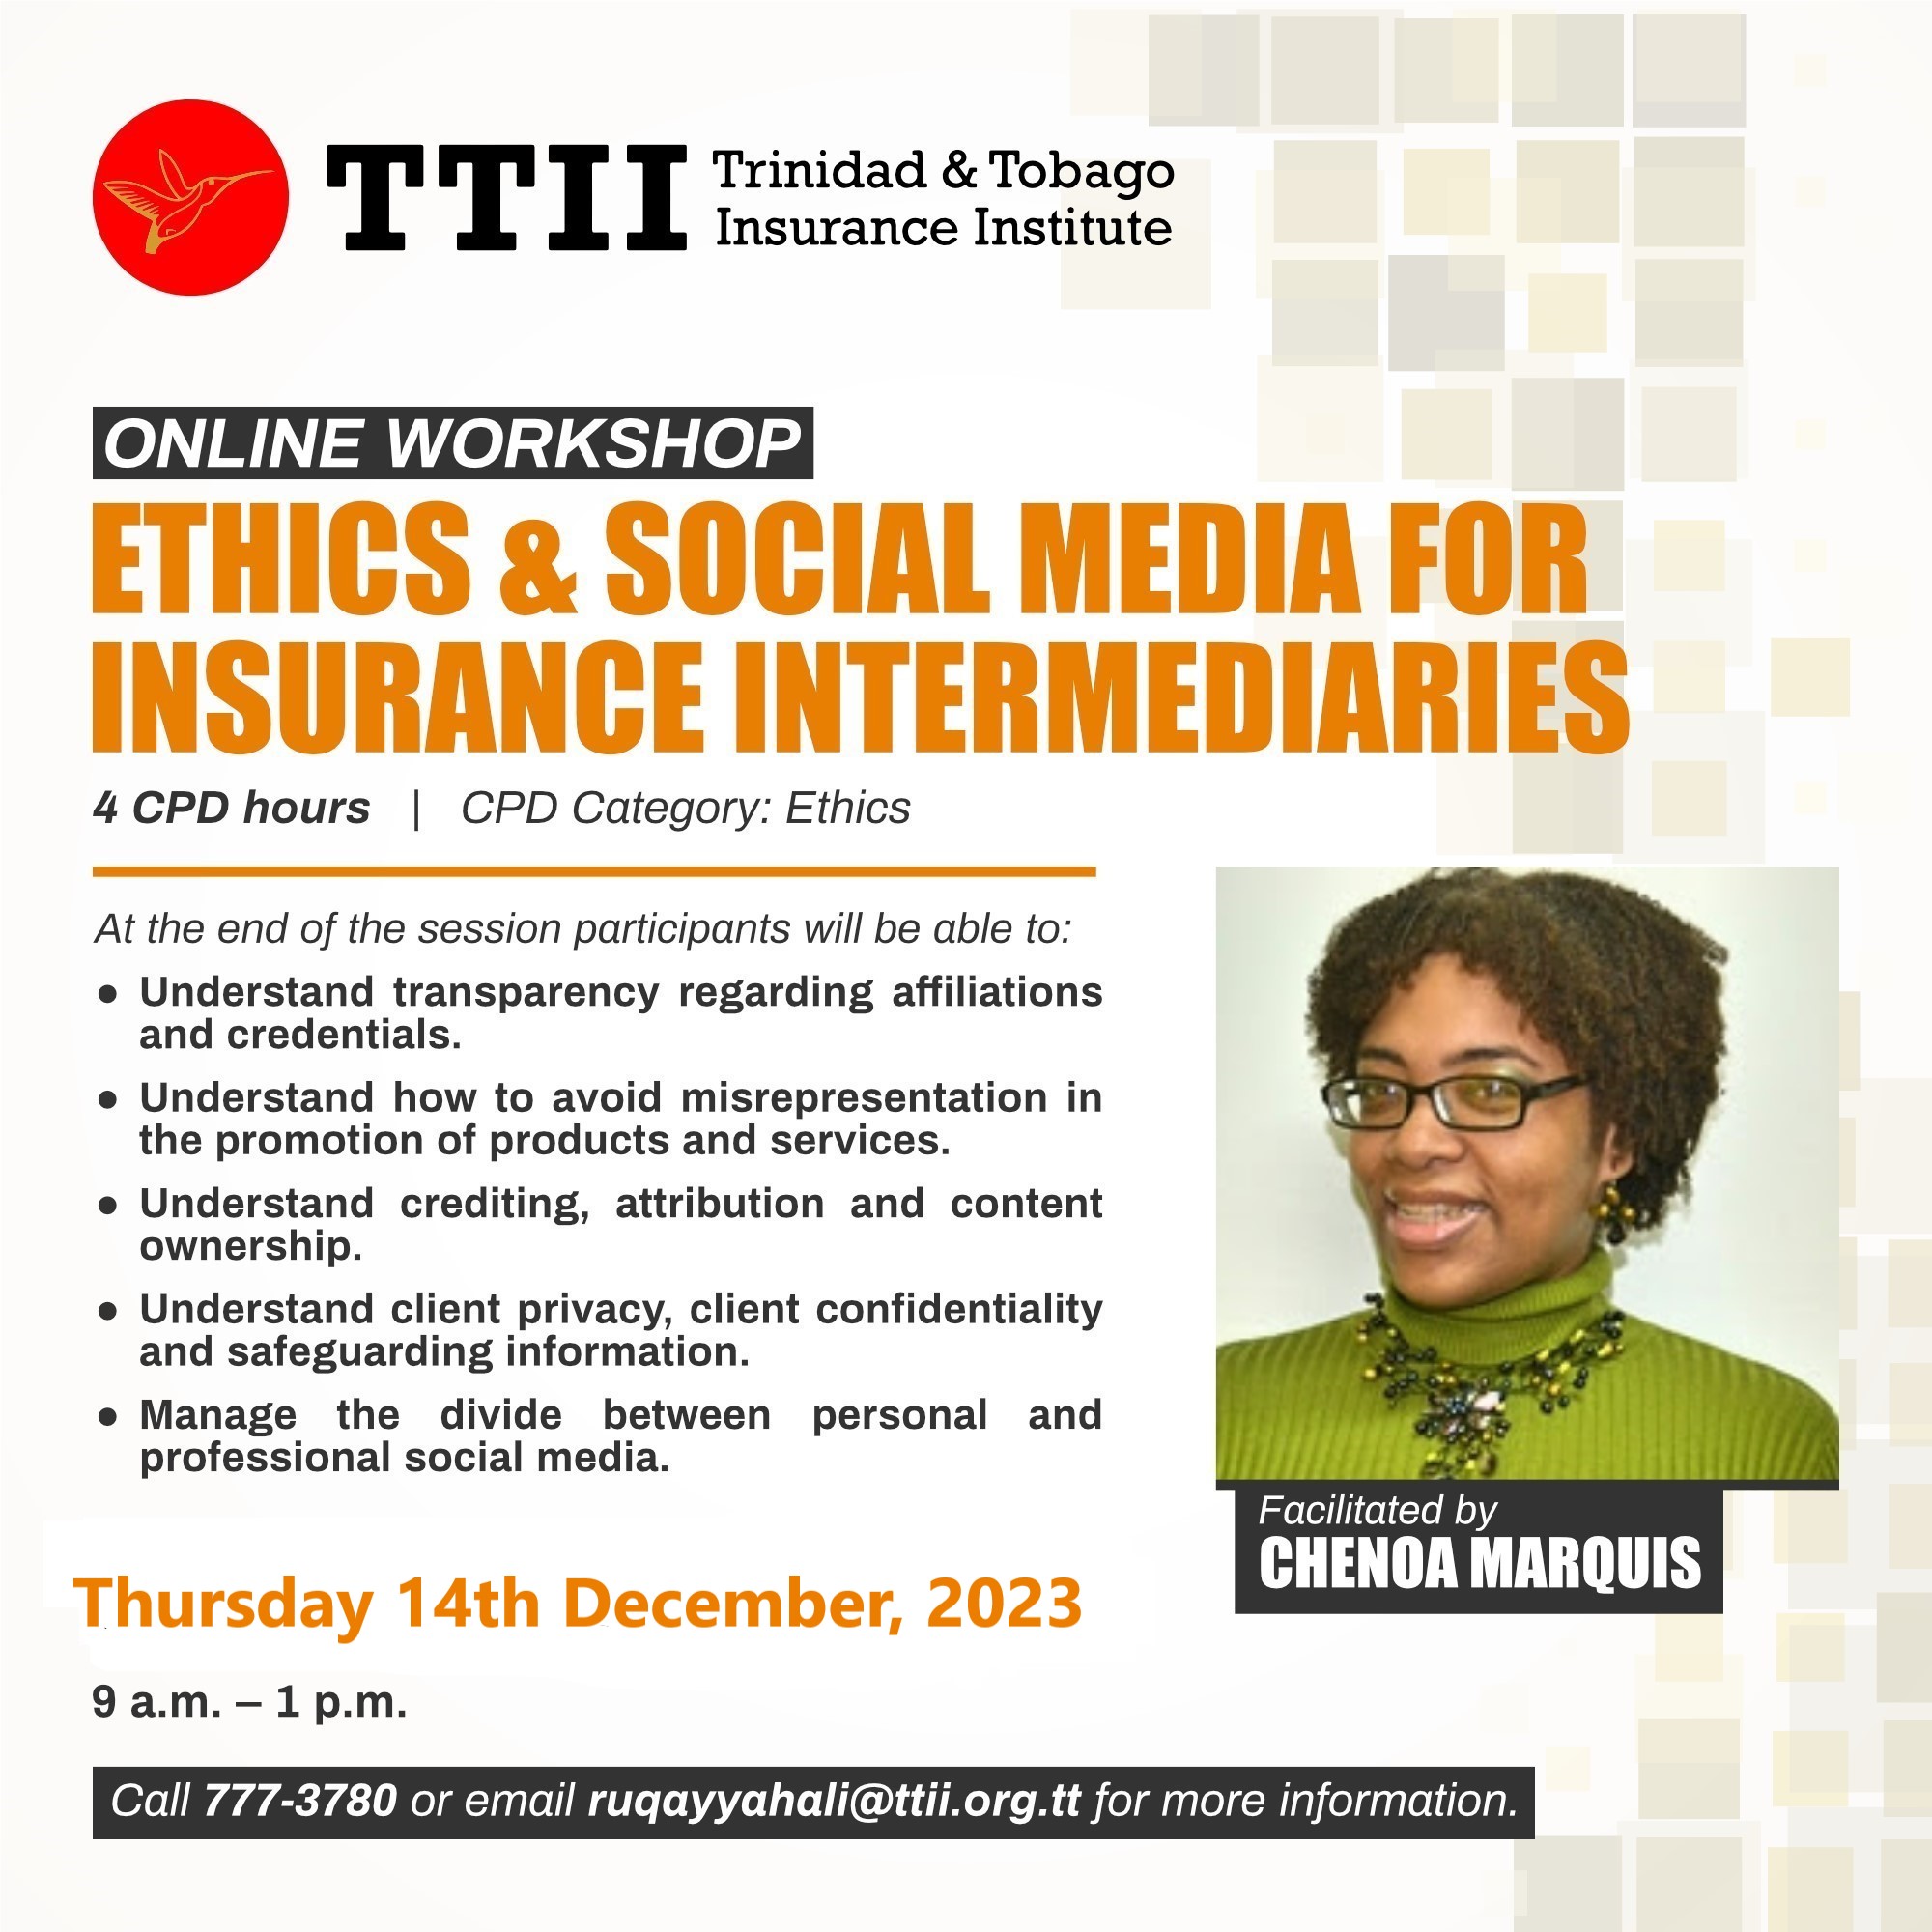 Ethics & Social Media for Insurance Intermediaries